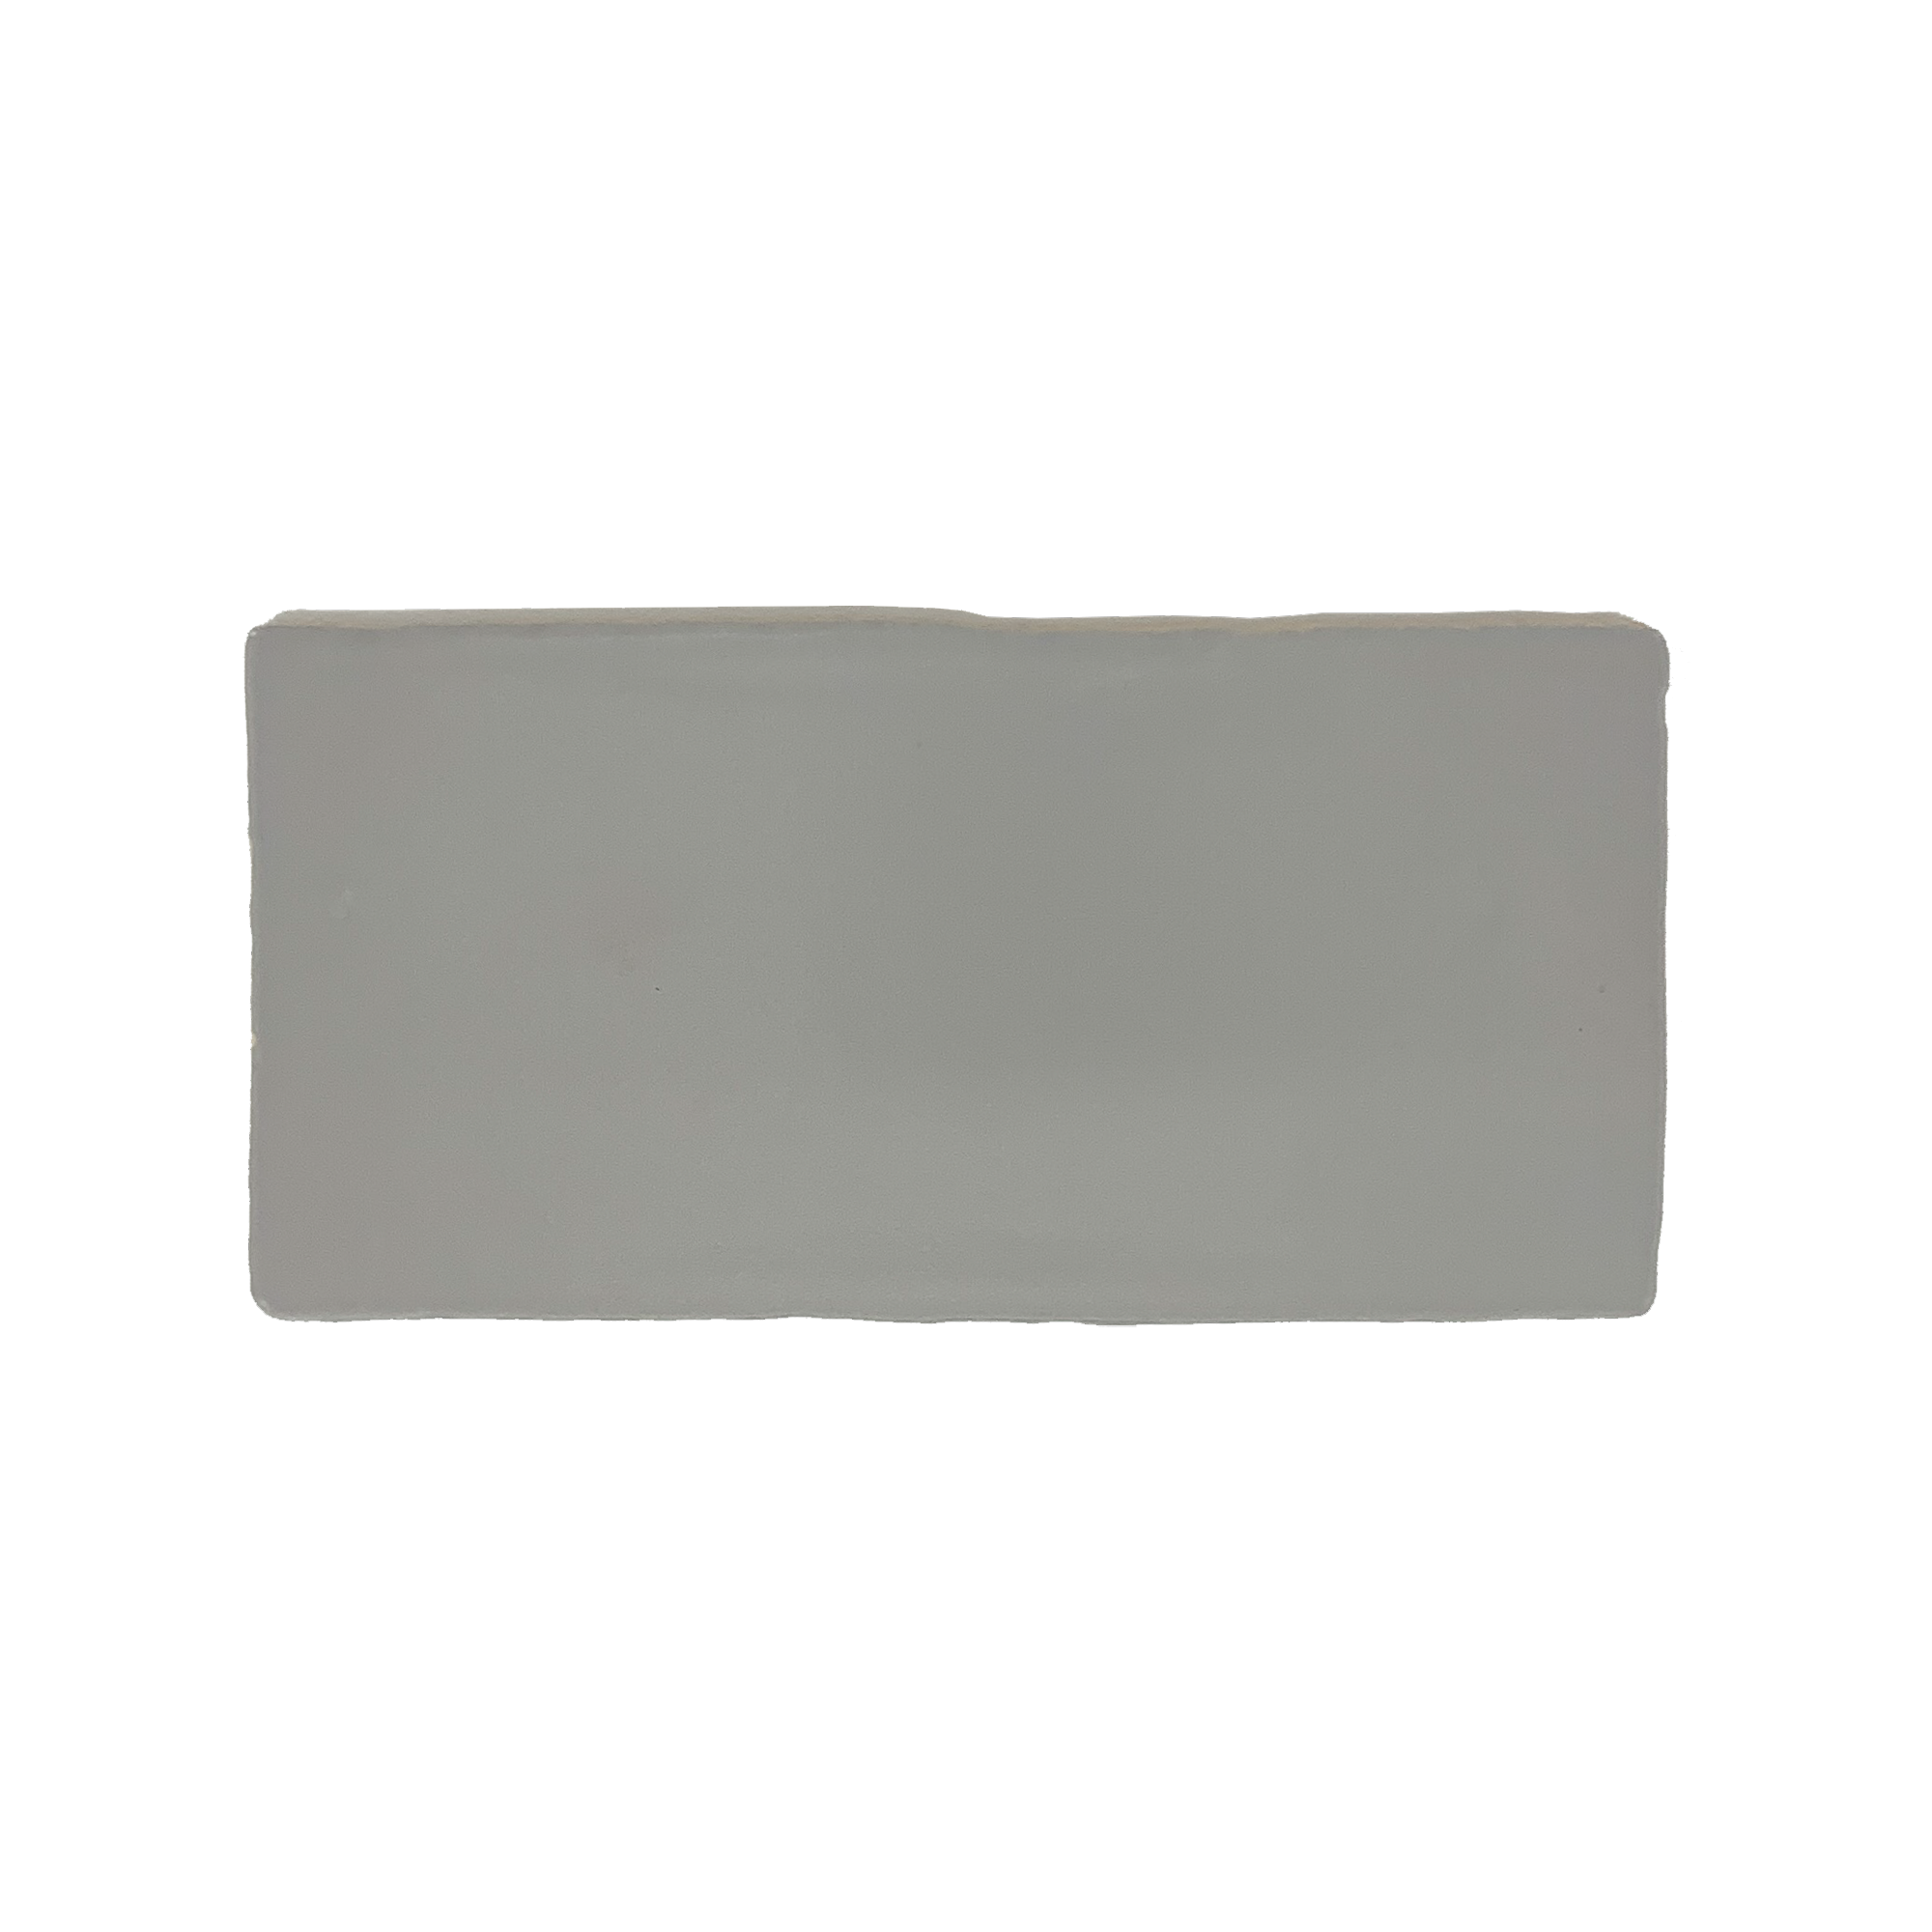 Elon Hampton Mist Ceramic Rectangle Wall Tile 3x6x0.375 Matte BC411M Surface Group International Product